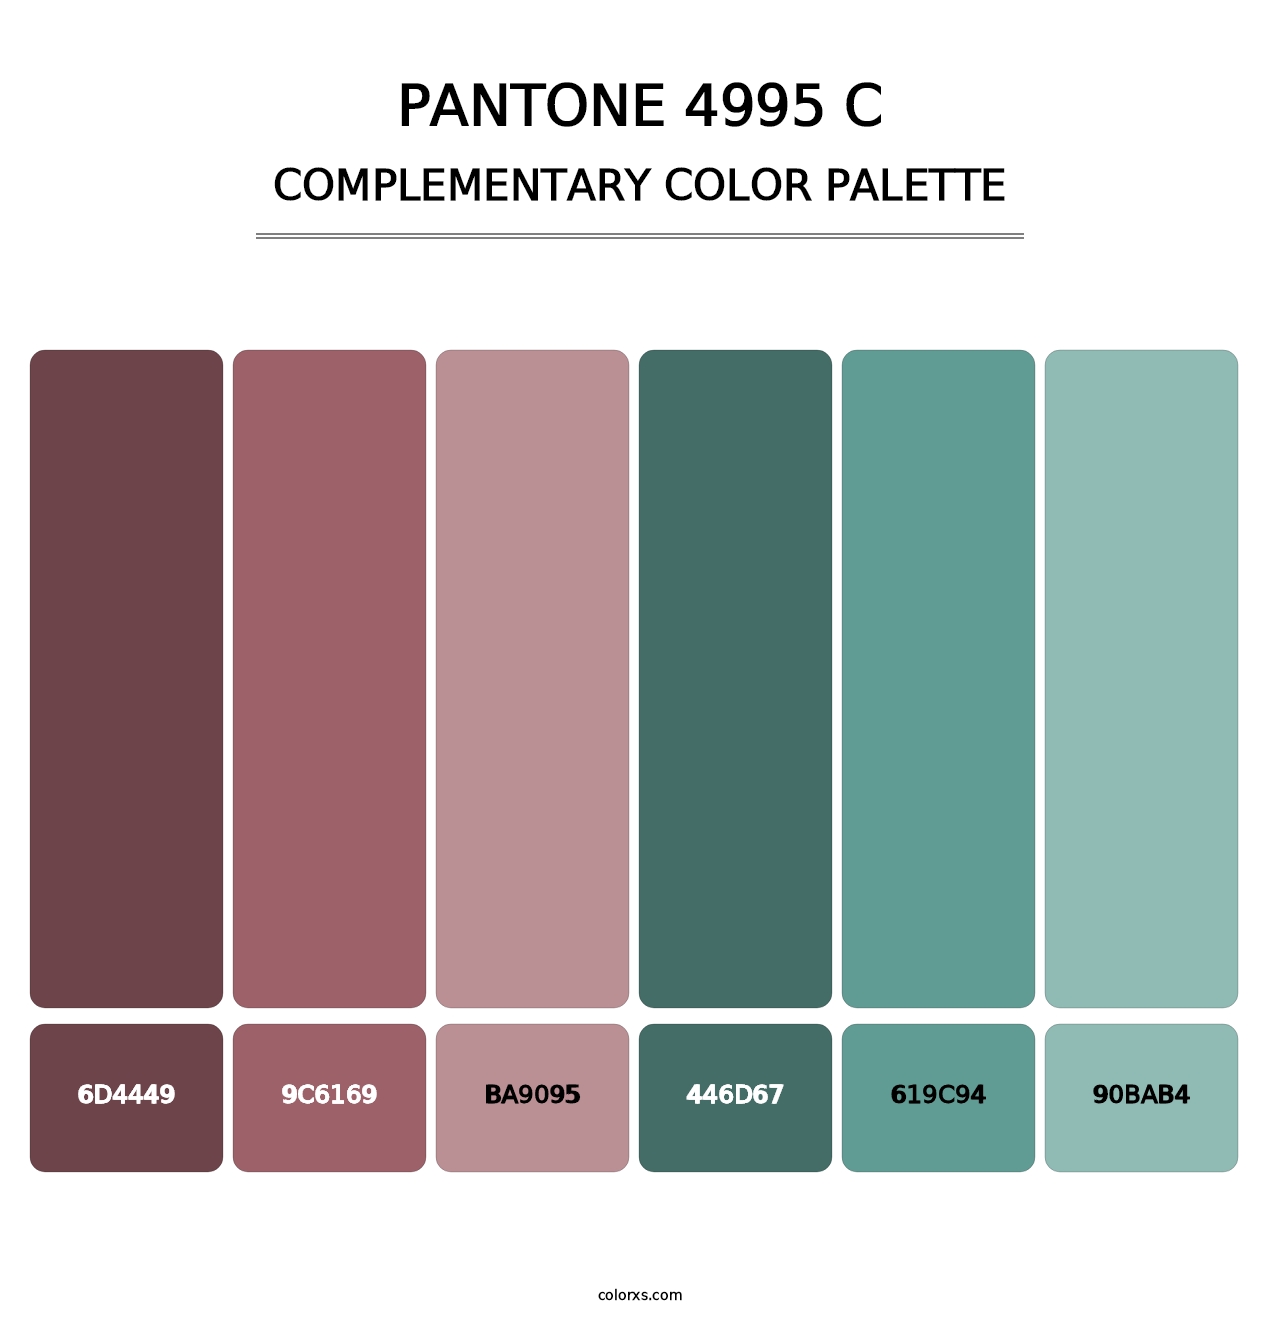 PANTONE 4995 C - Complementary Color Palette